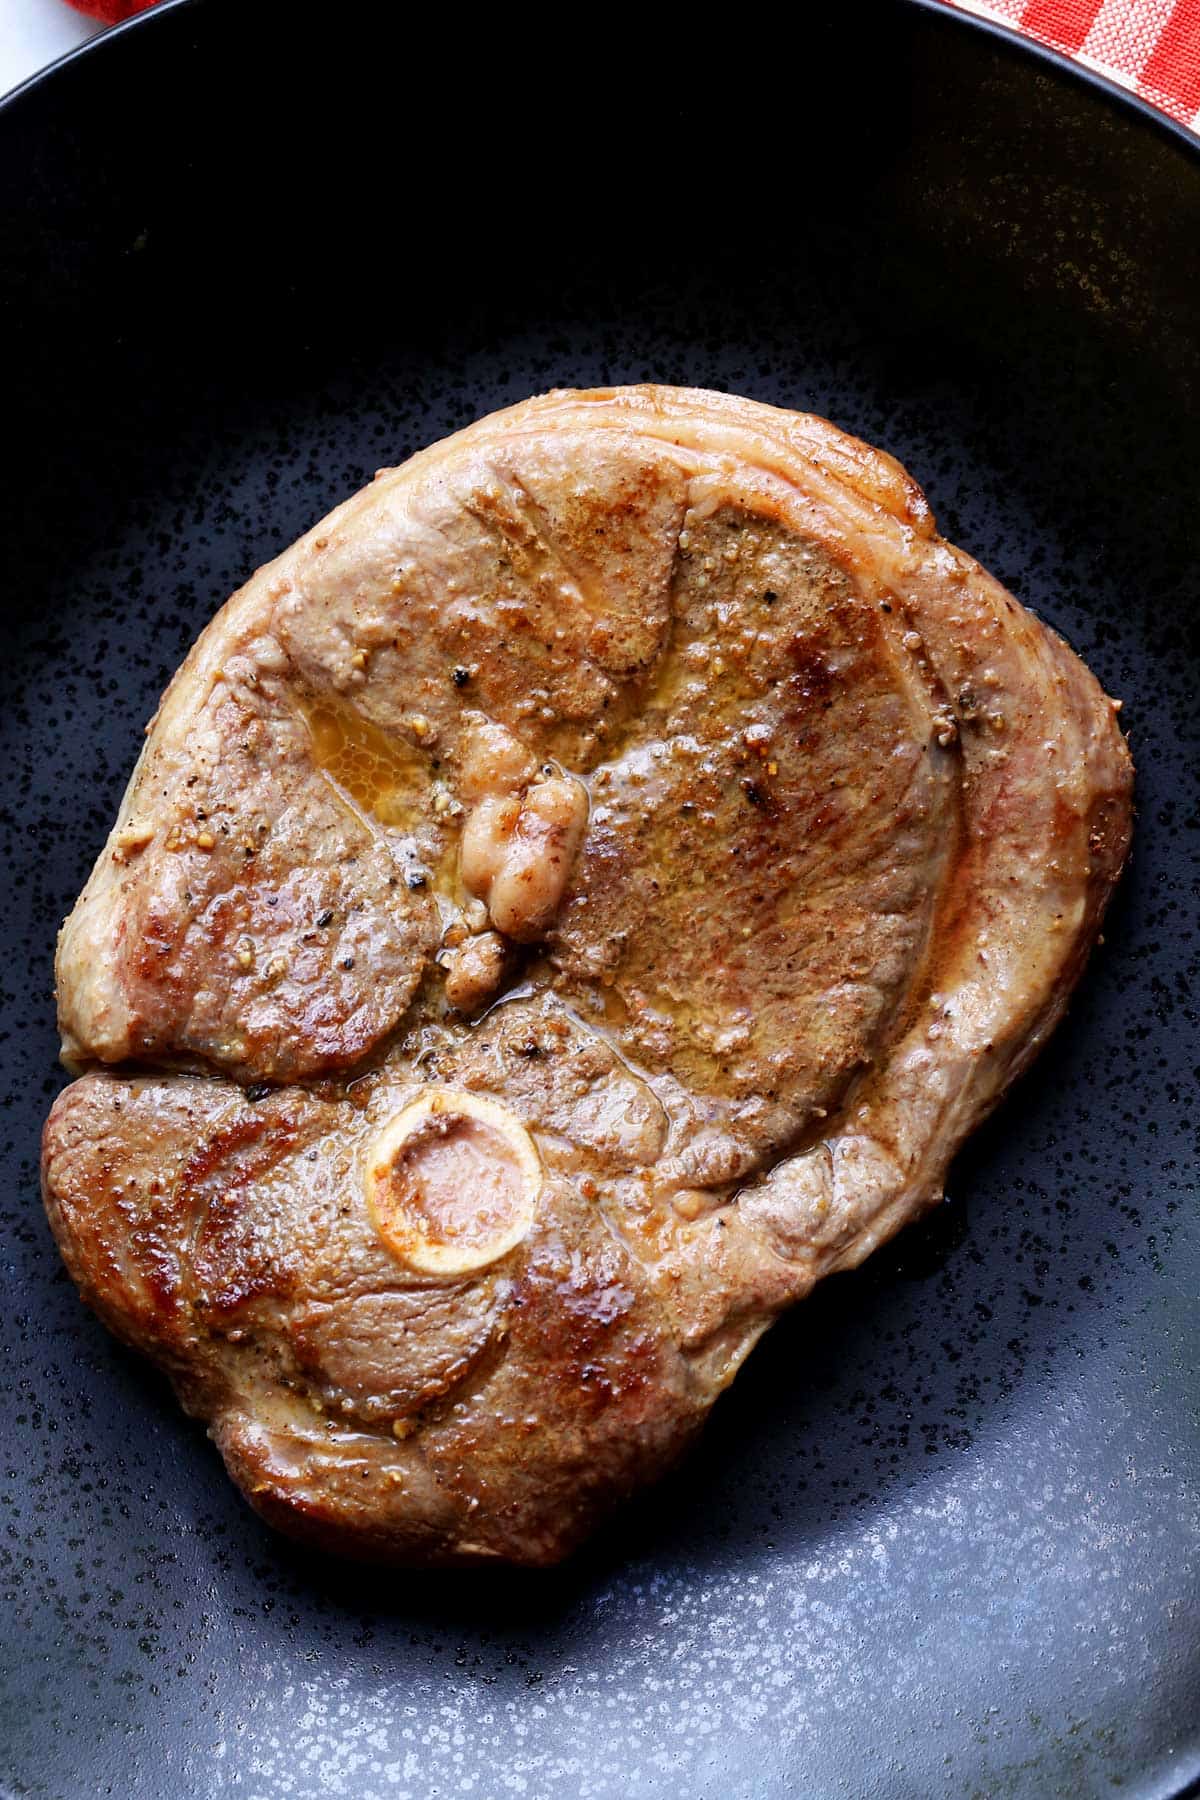 Lamb steak is served on a dark plate.